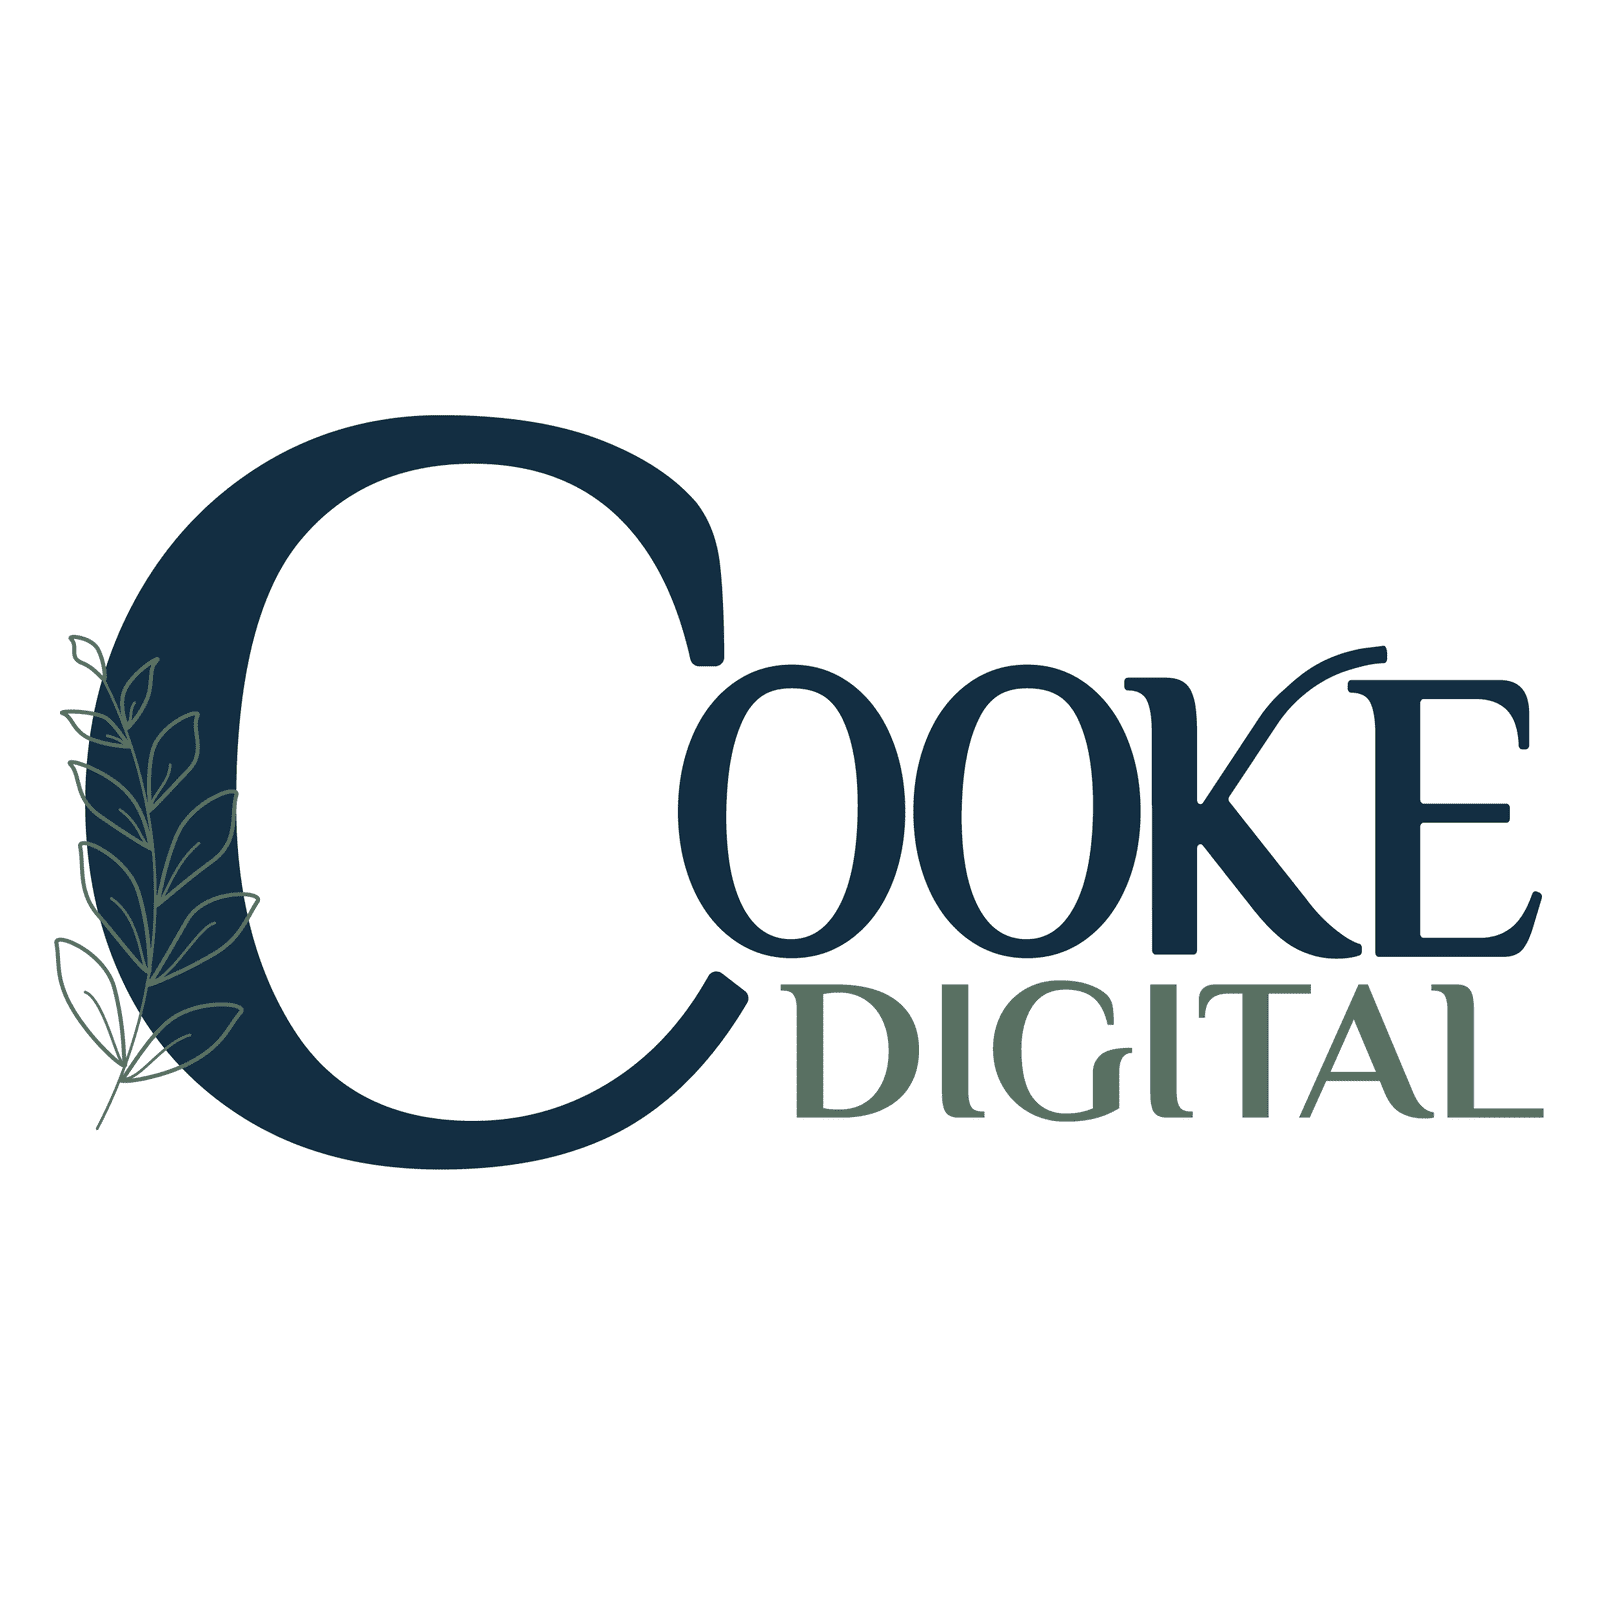 Cooke Digital Ltd.